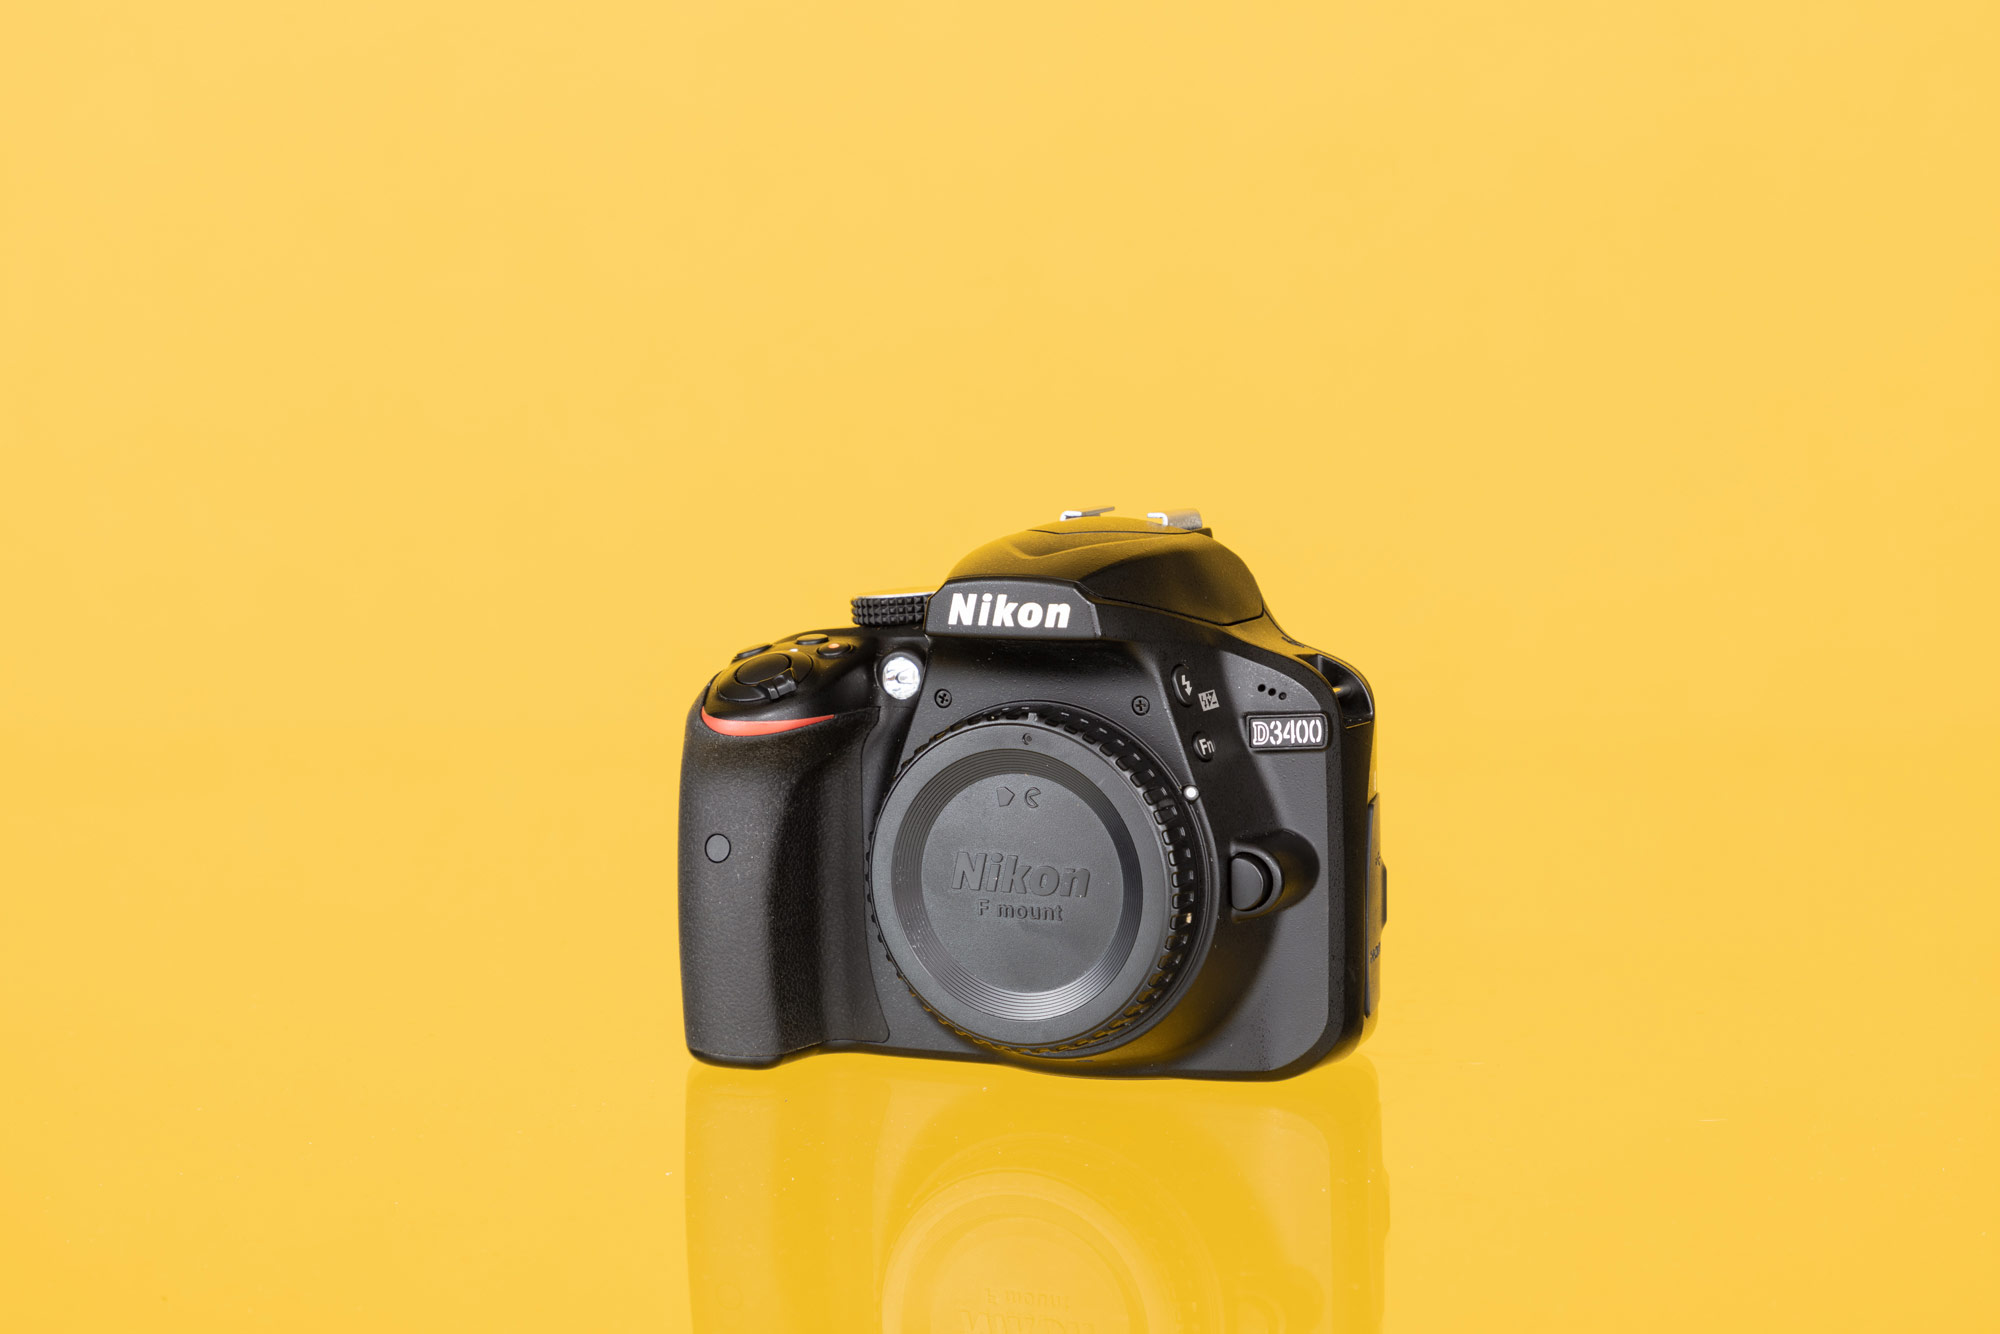 Nikon D3400 Model Overview & Specs